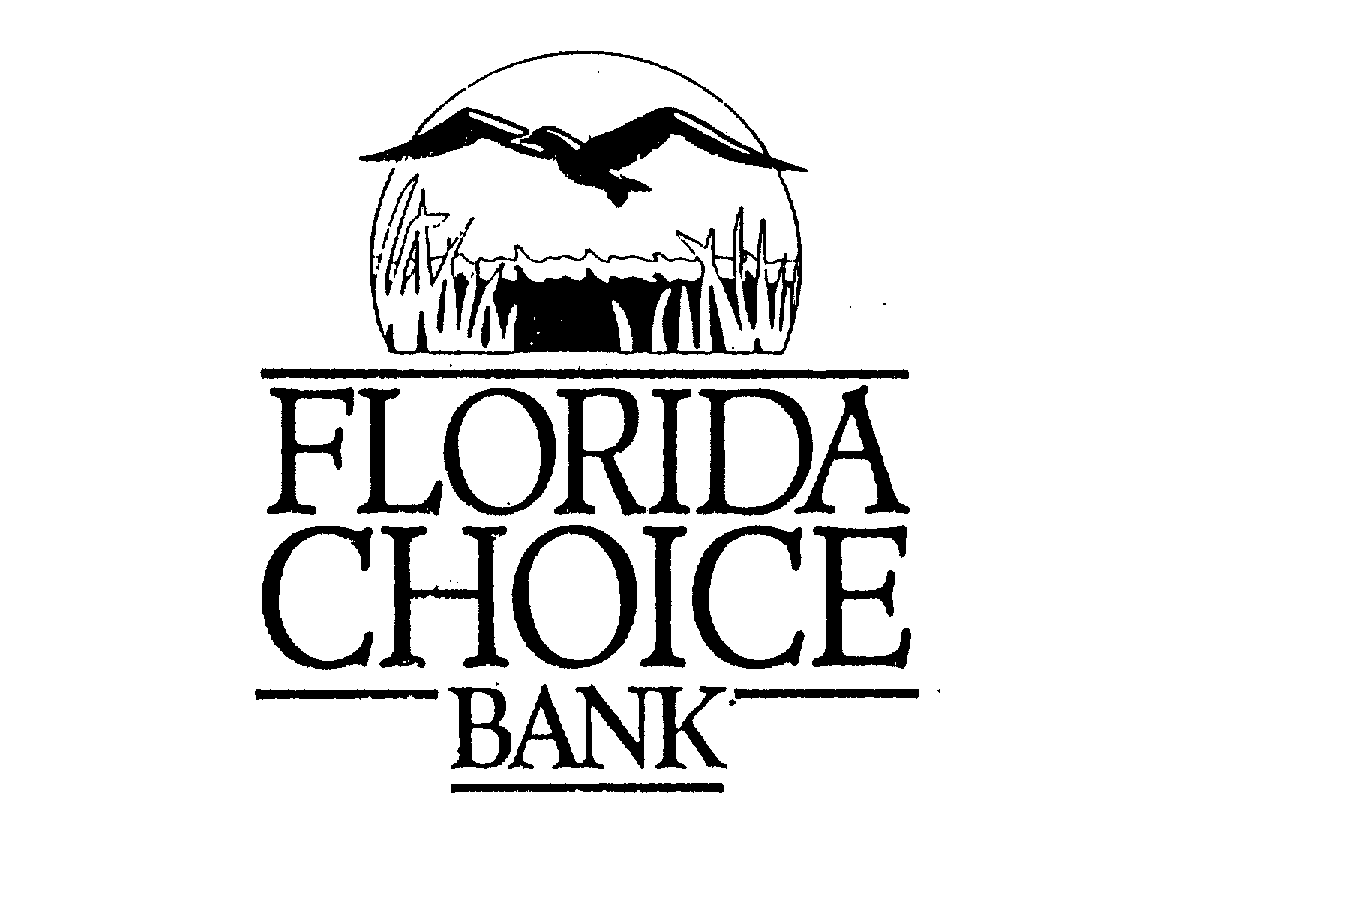  FLORIDA CHOICE BANK